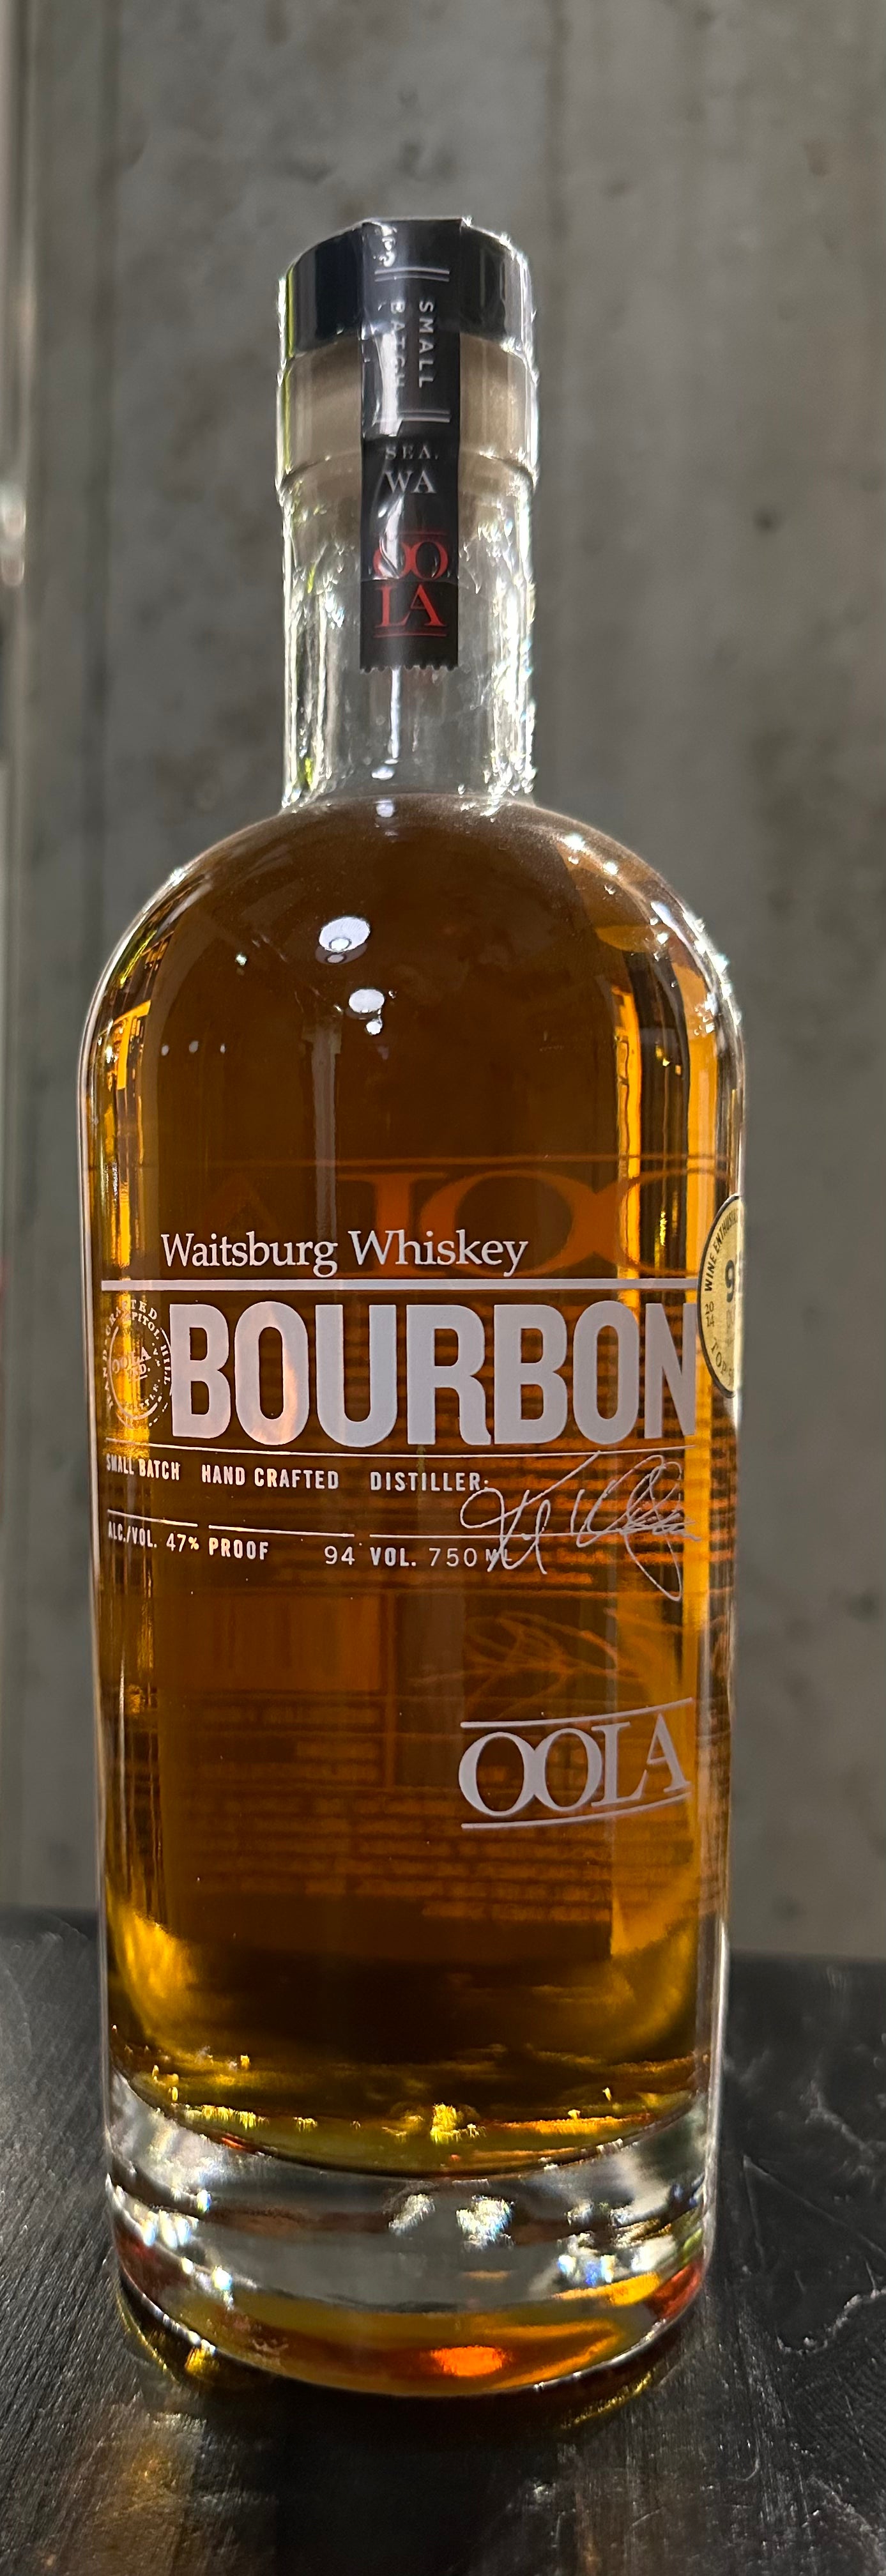 Oola Waitsburg Bourbon, Cask Strength Whiskey